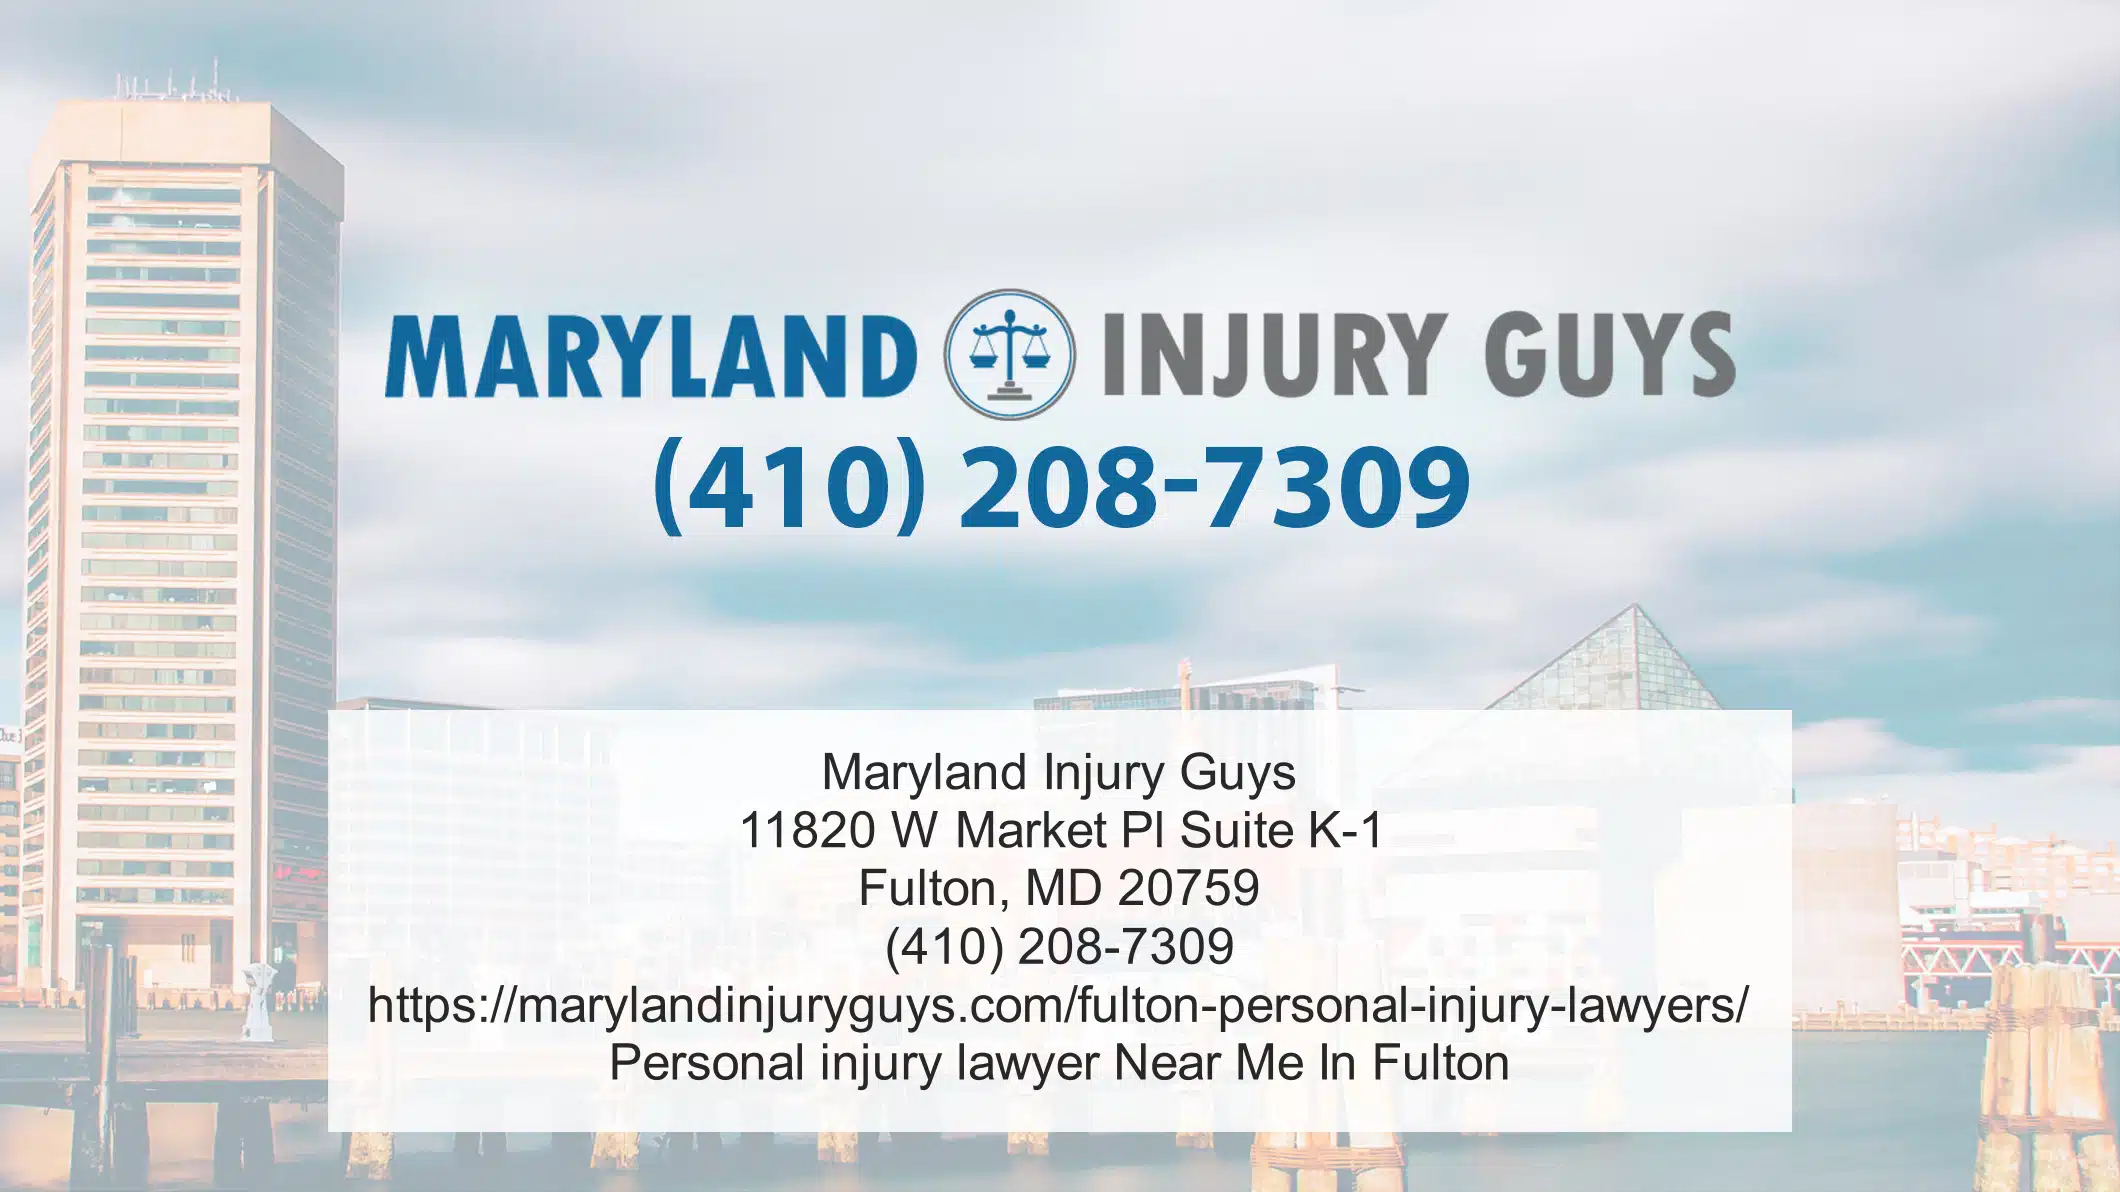 Personal-injury-lawyer-Near-Me-Fulton-Maryland-Injury-Guys-scaled.jpg.webp